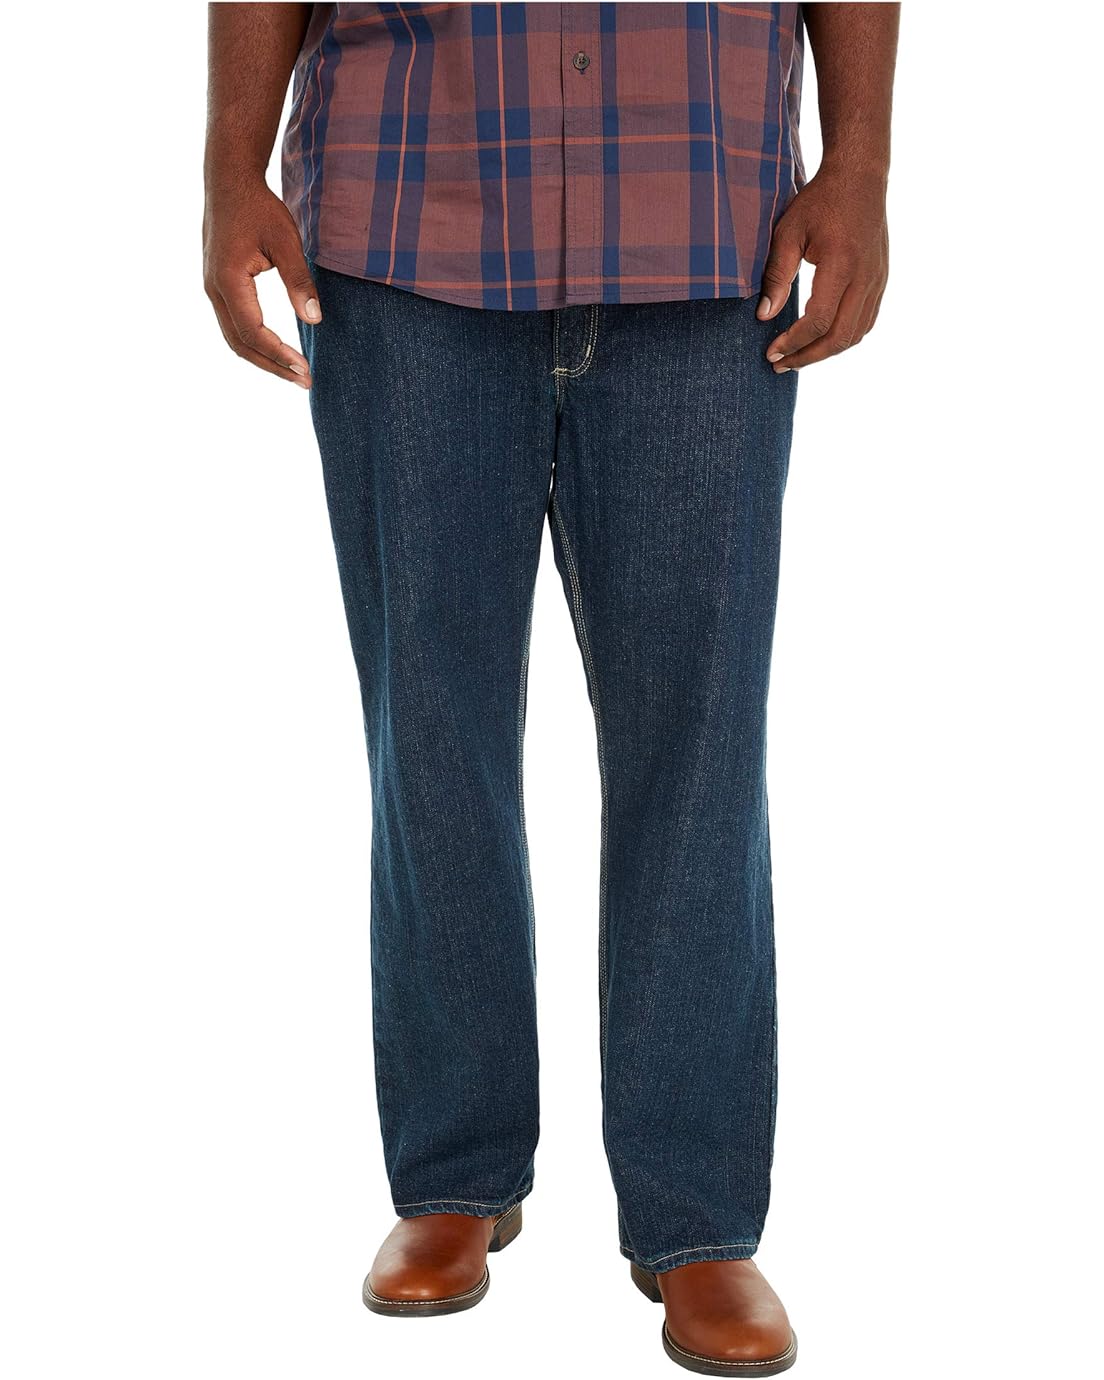 Carhartt Big & Tall Flame-Resistant Rugged Flex Jeans Straight Fit